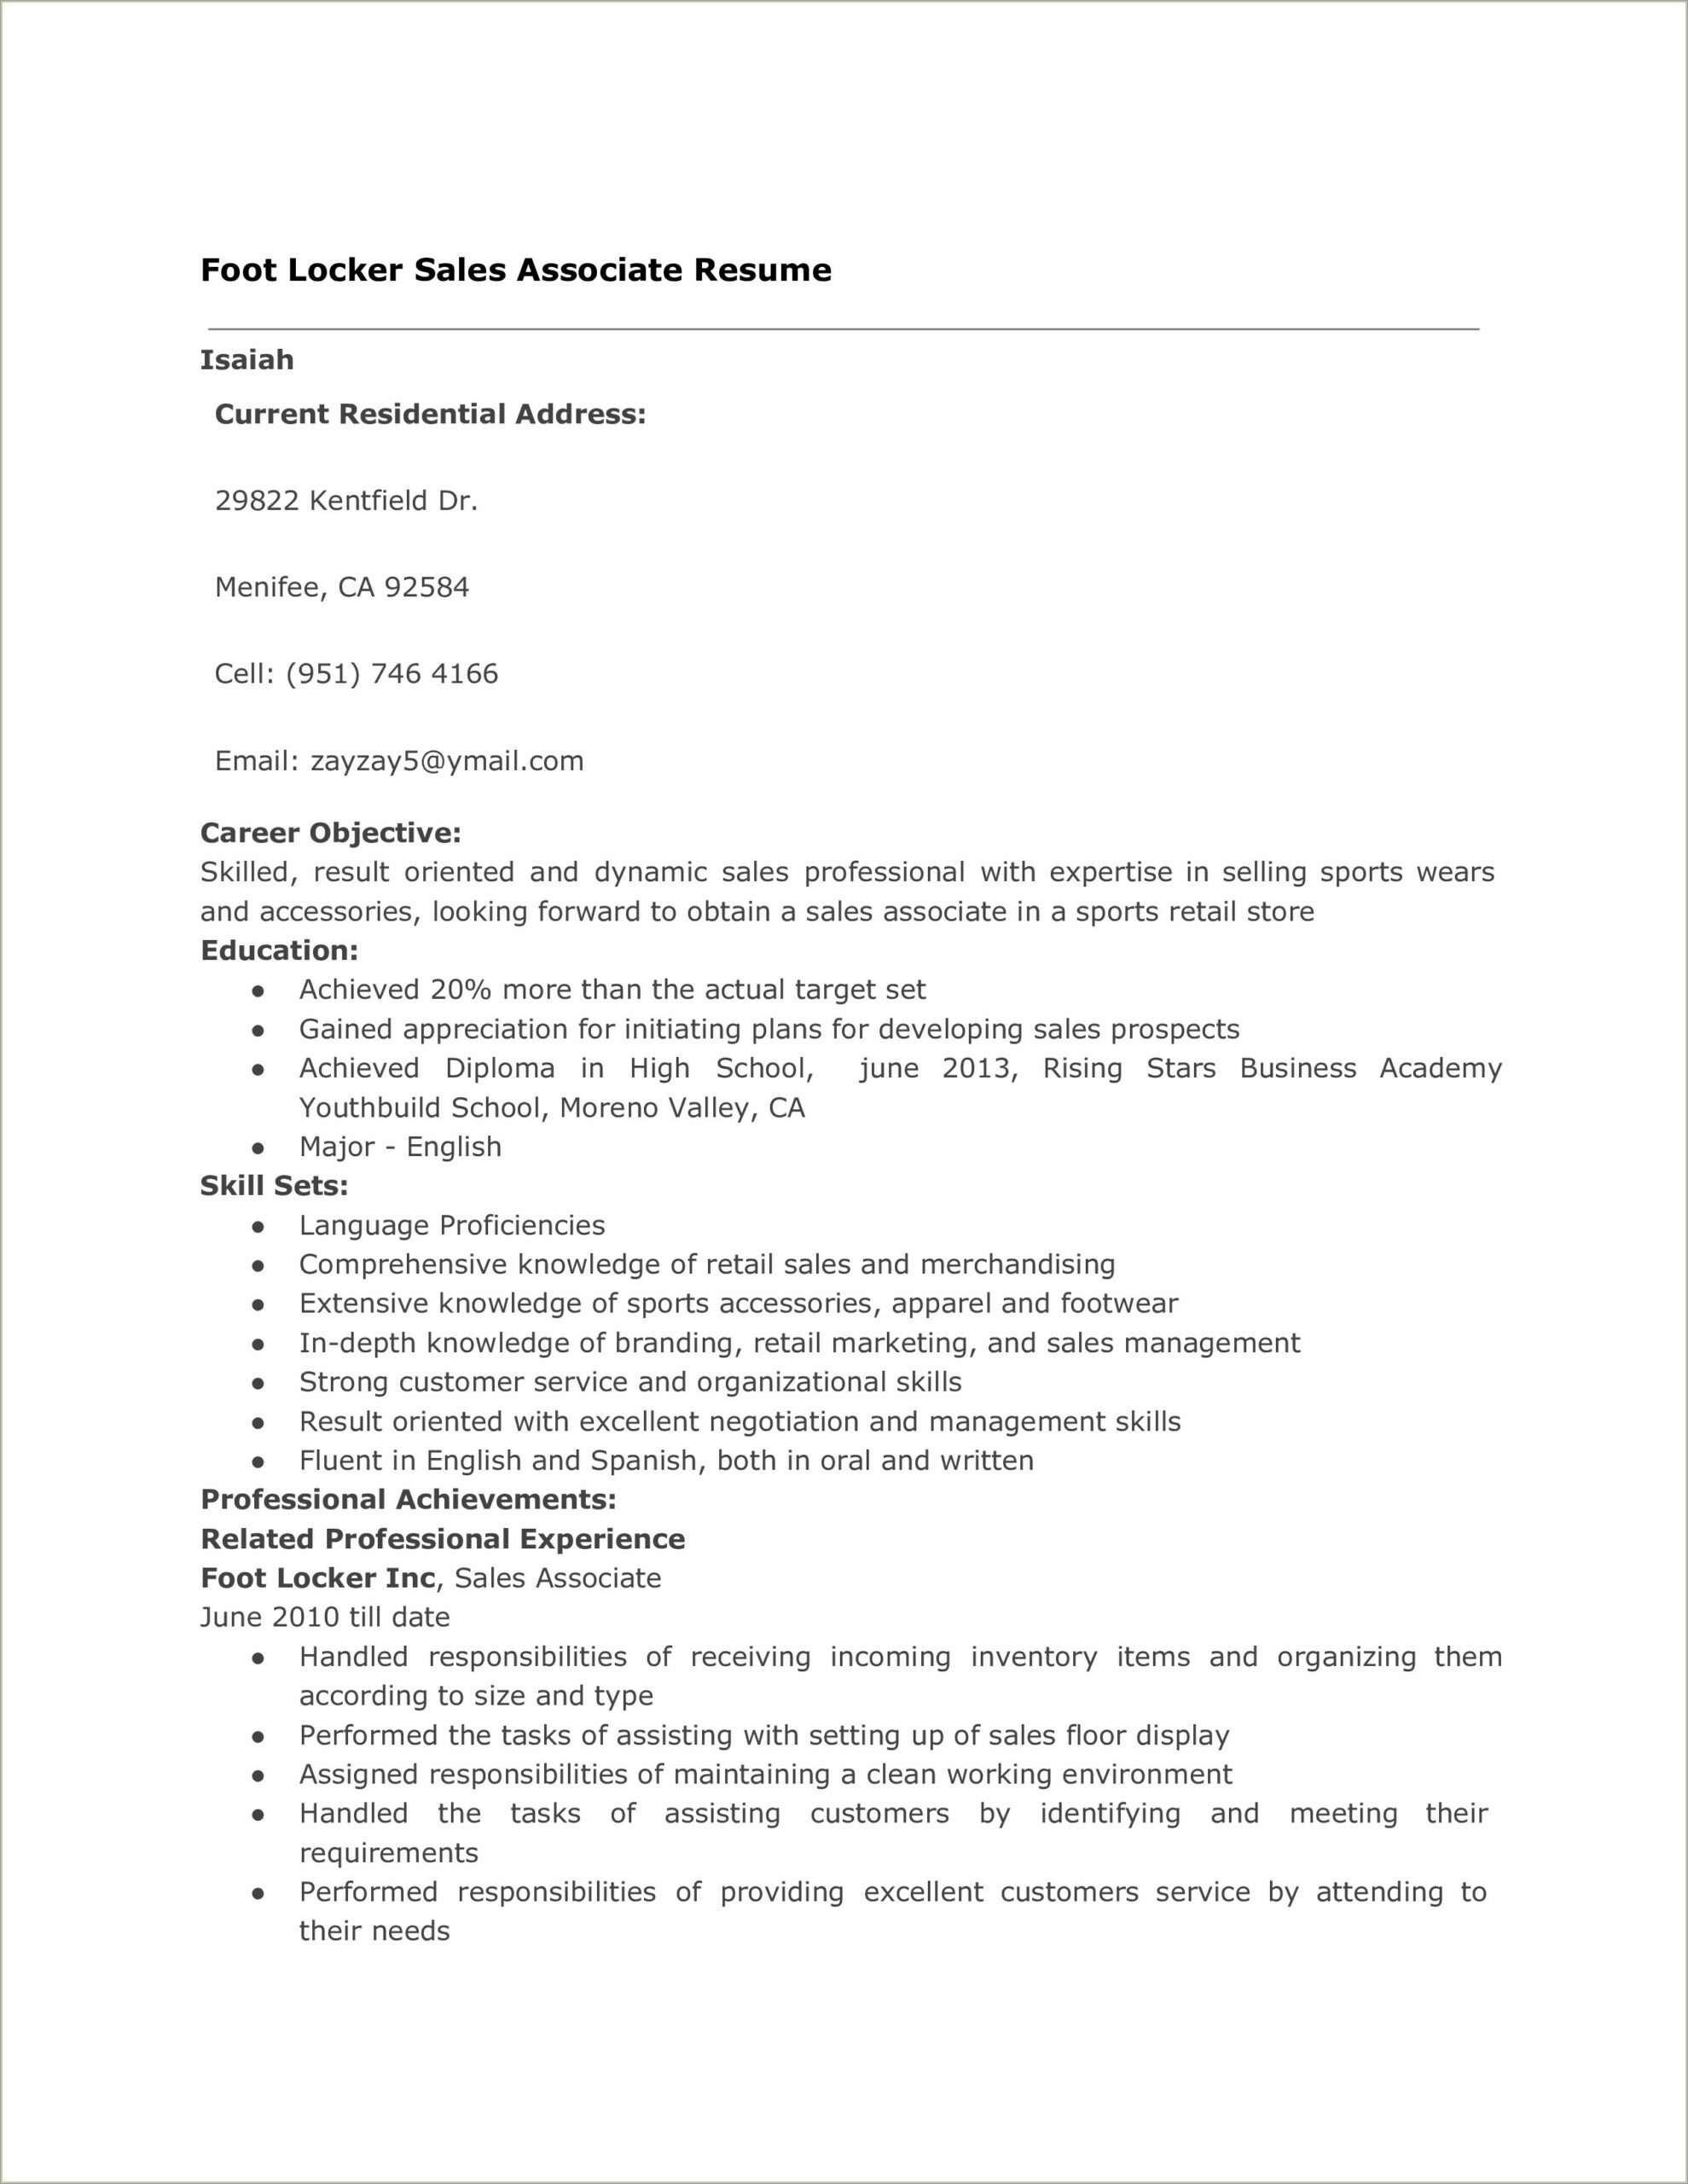 Foot Locker Sales Associate Job Resume